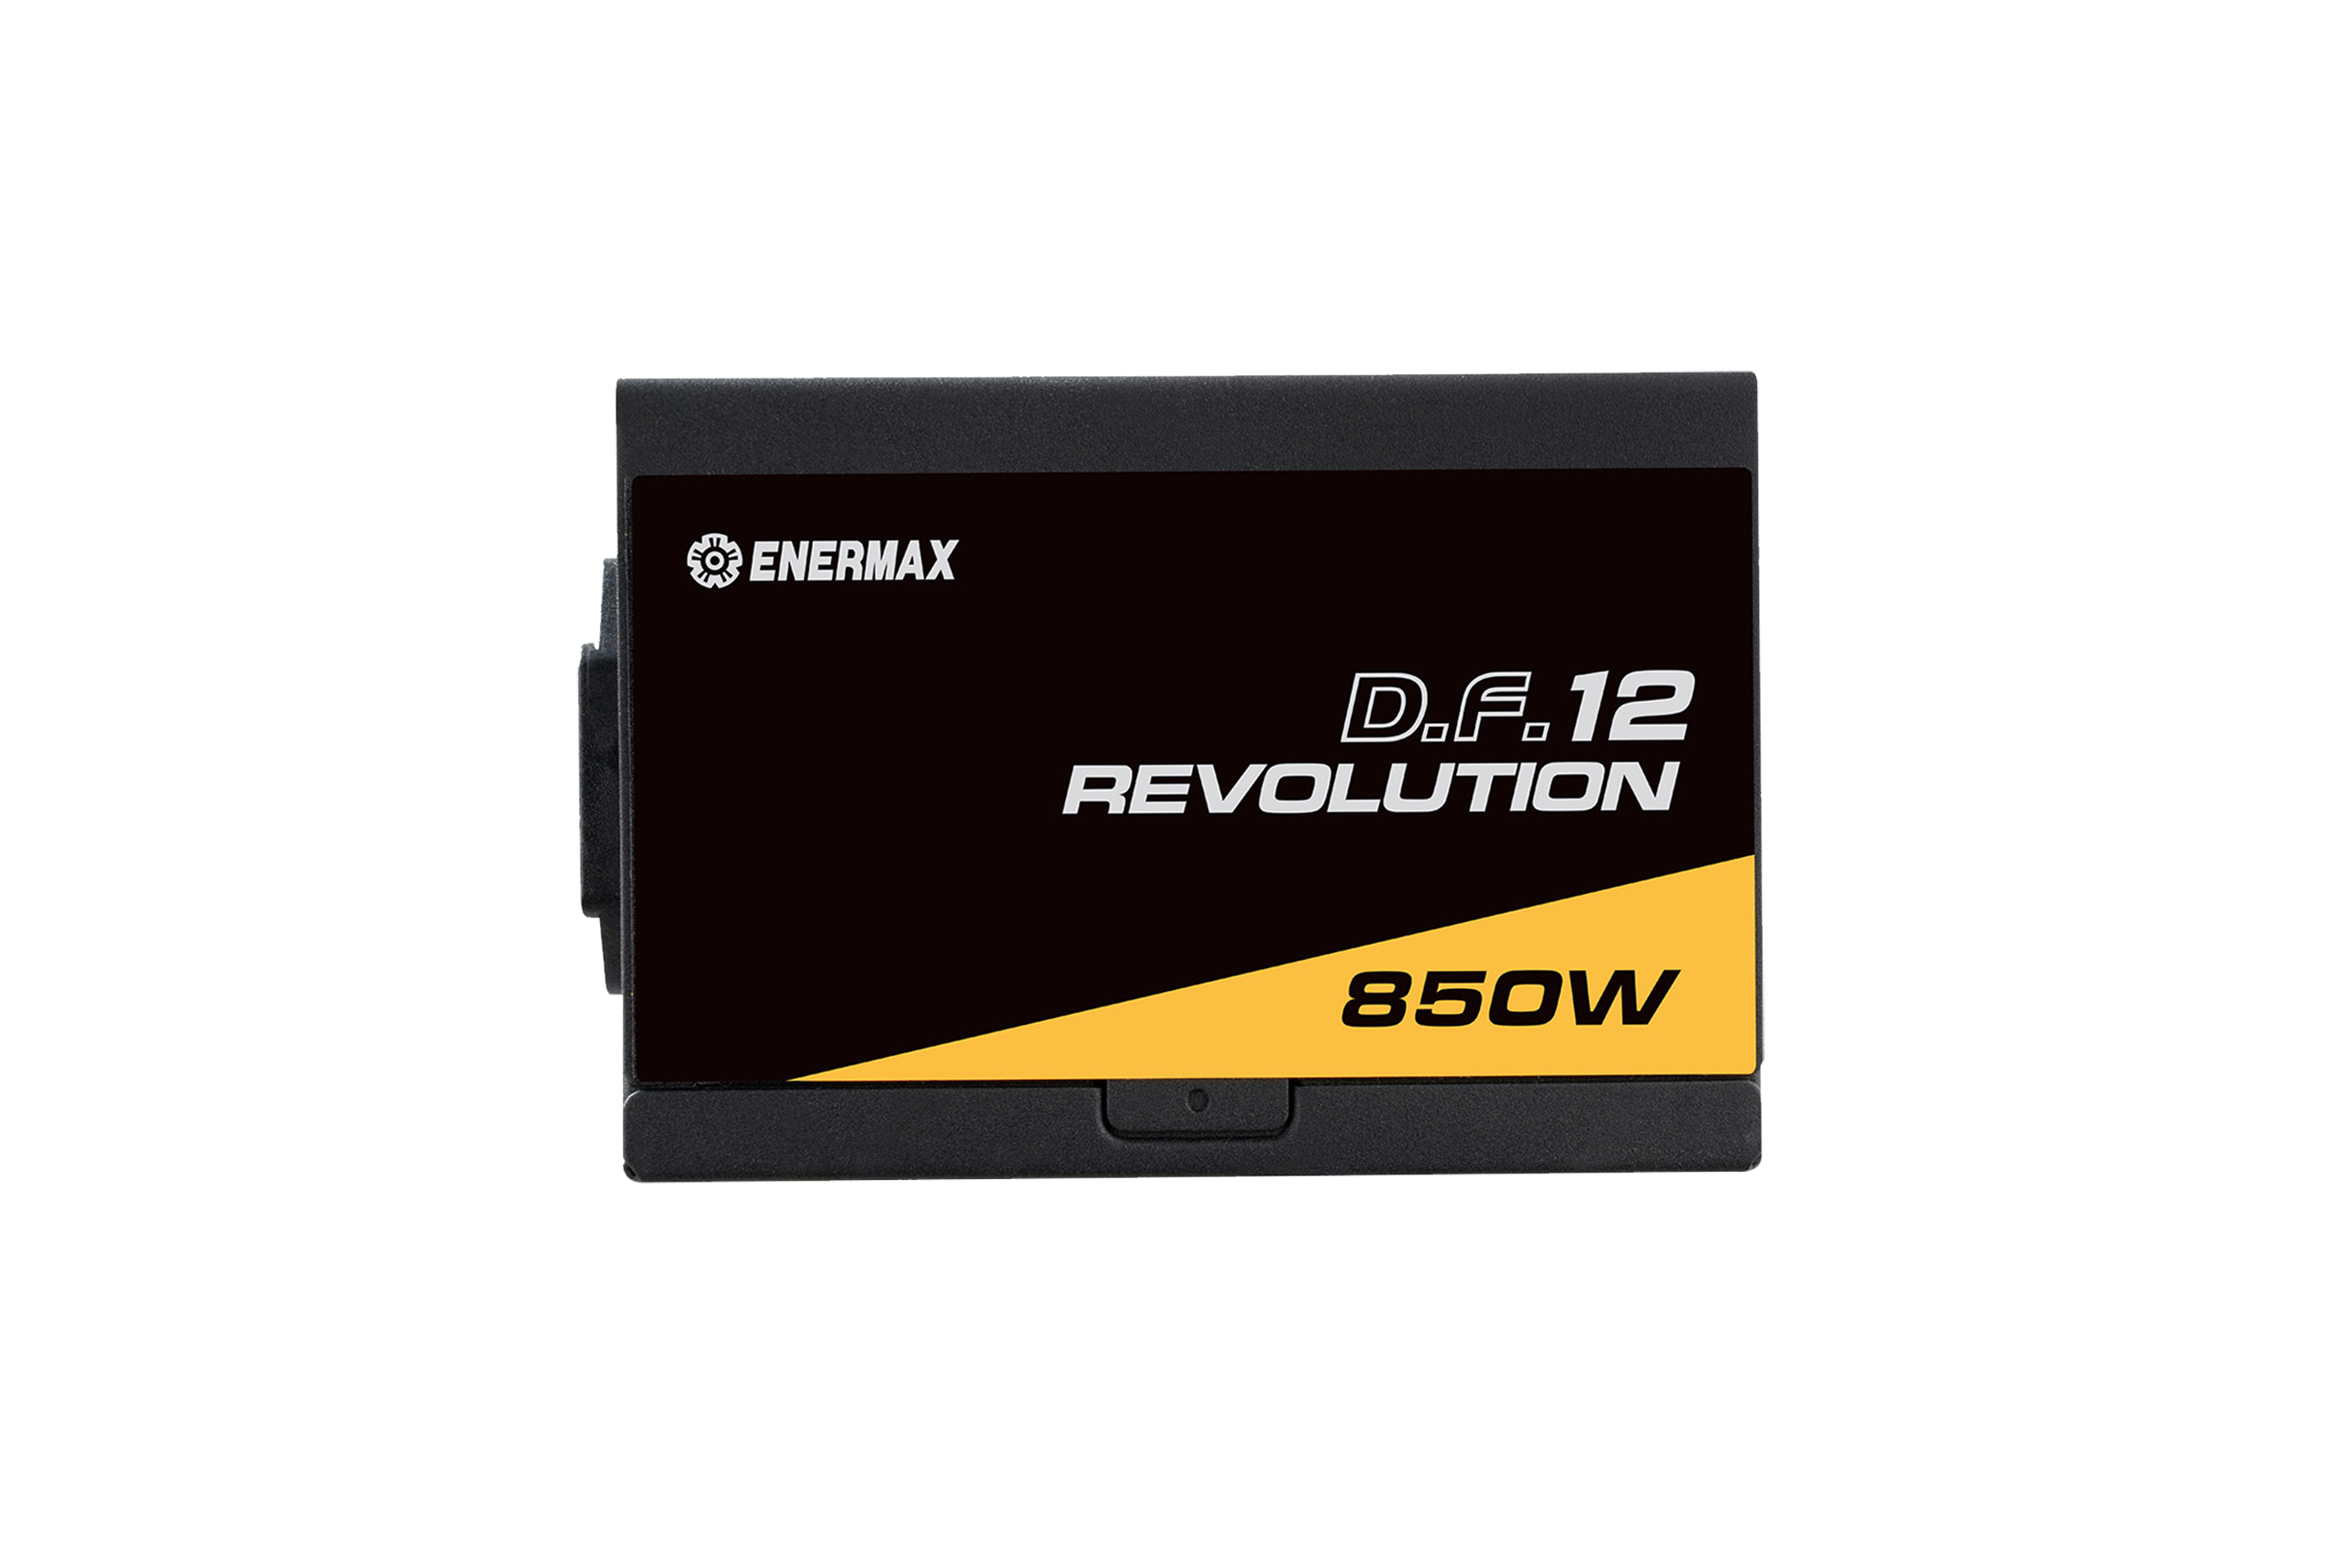 REVOLUTION D.F. 12 850W / 80 PLUS® Gold / ATX 3.1 Fully-Modular Power Supply